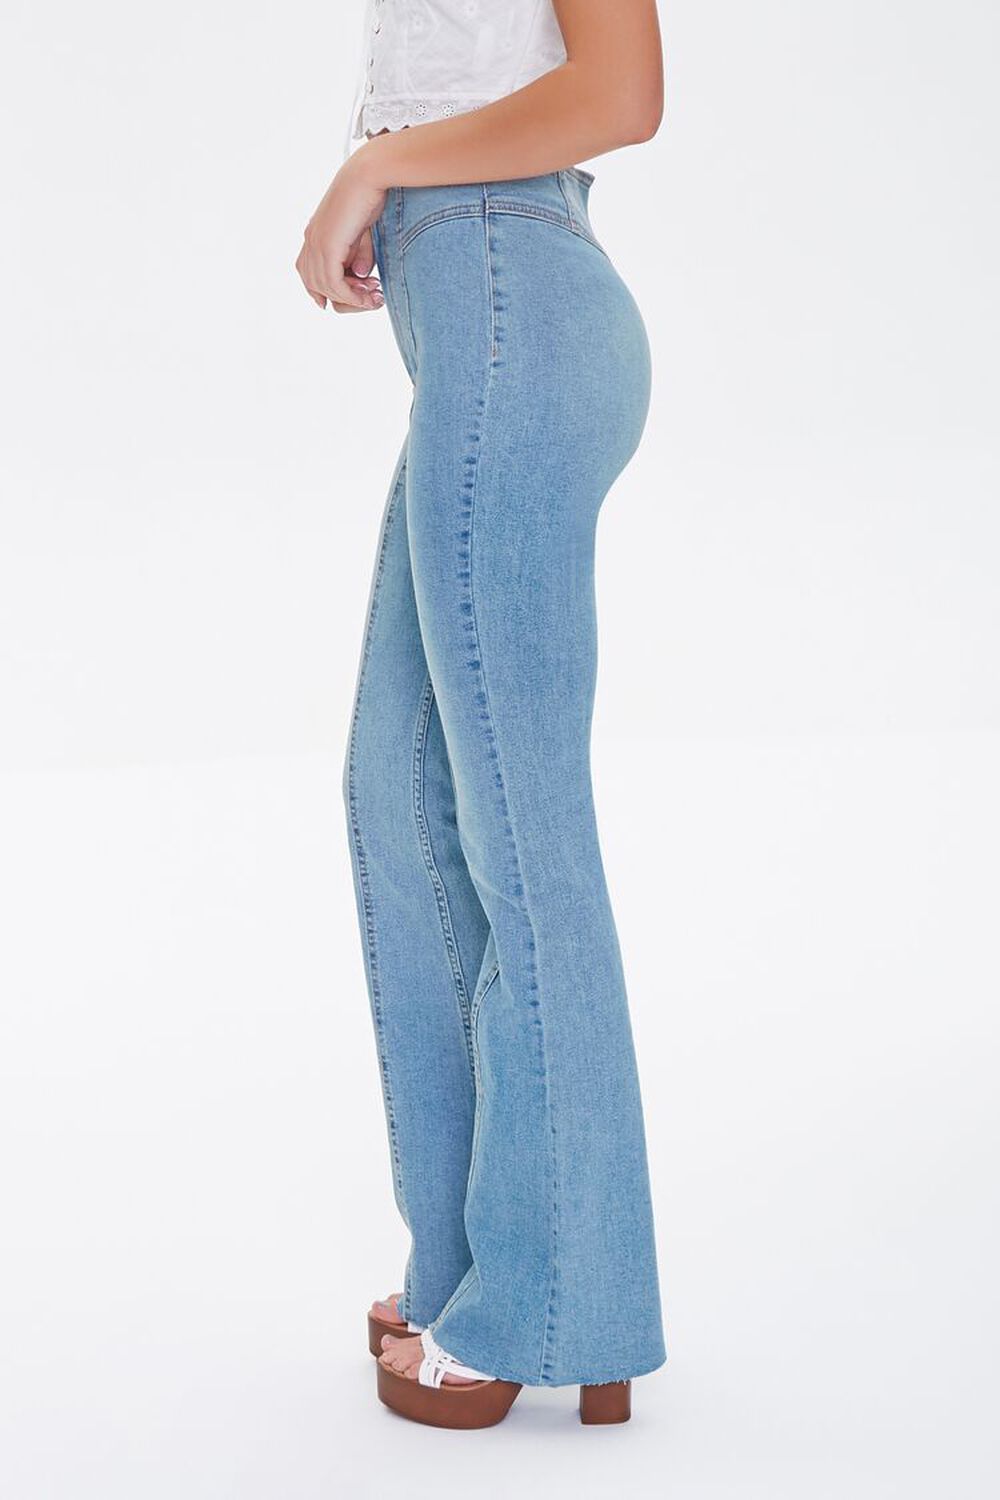 MEDIUM DENIM High-Rise Flare Jeans, image 3